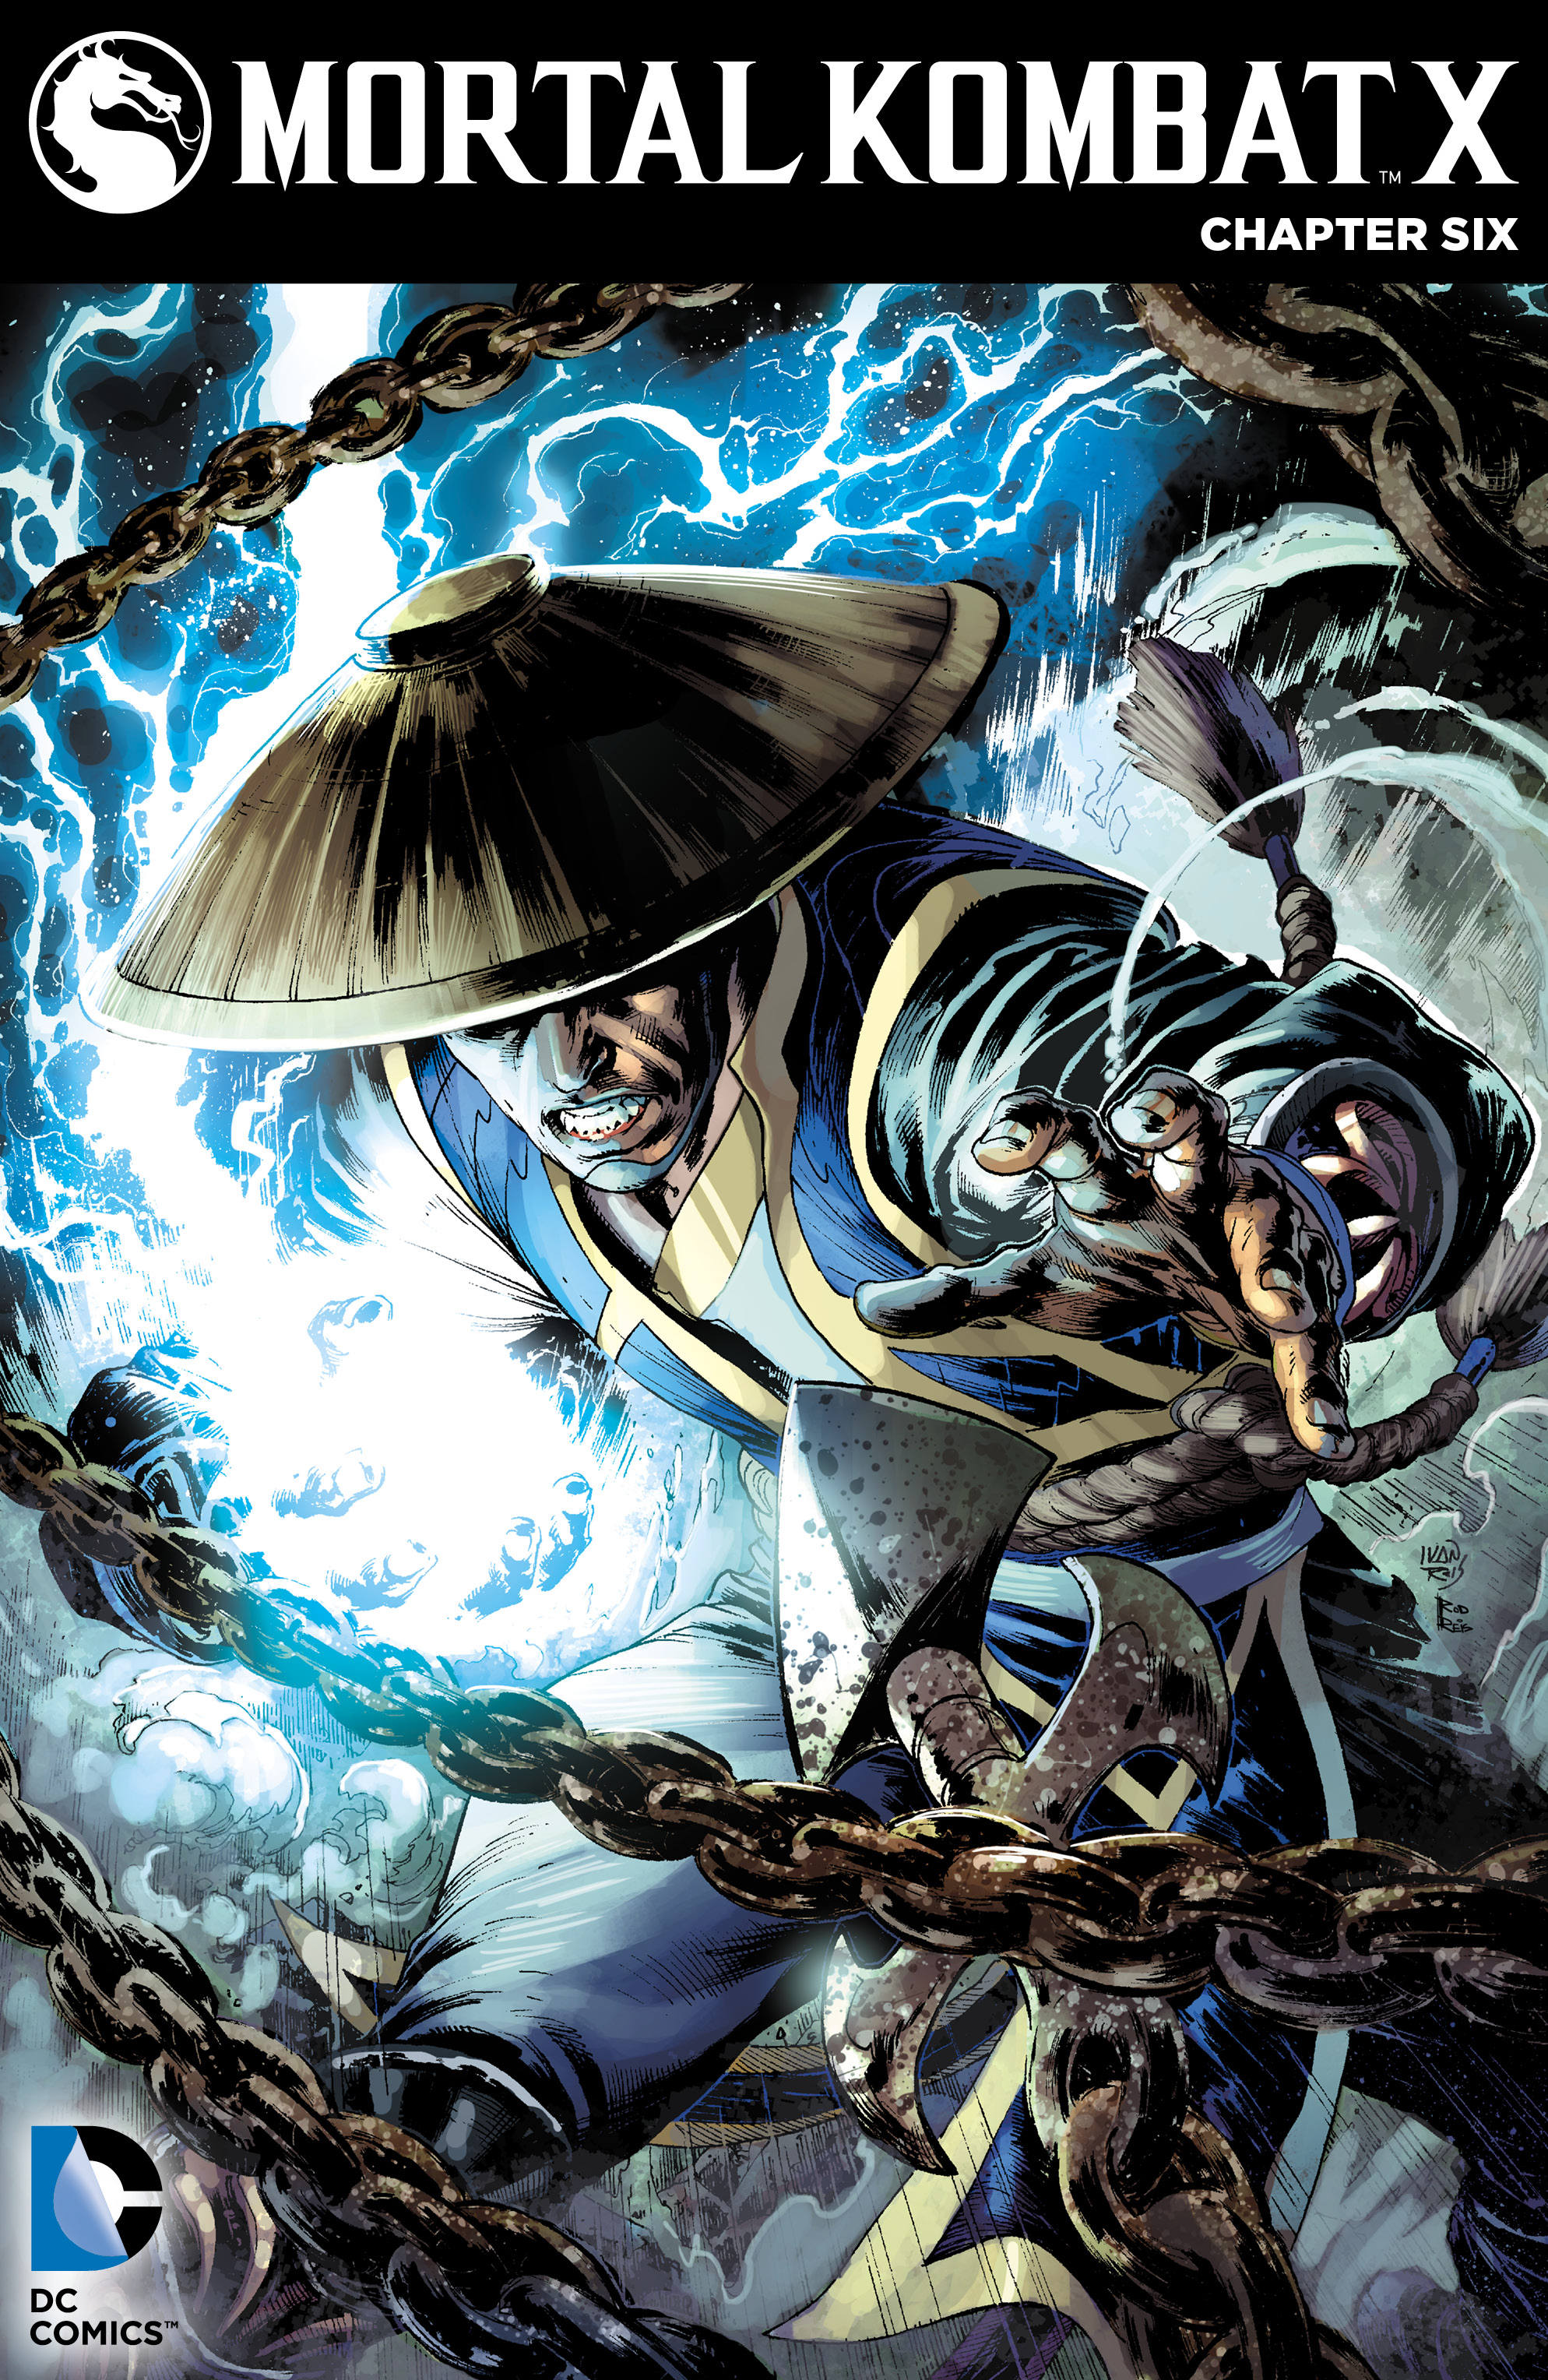 Mortal Kombat X #6 preview images